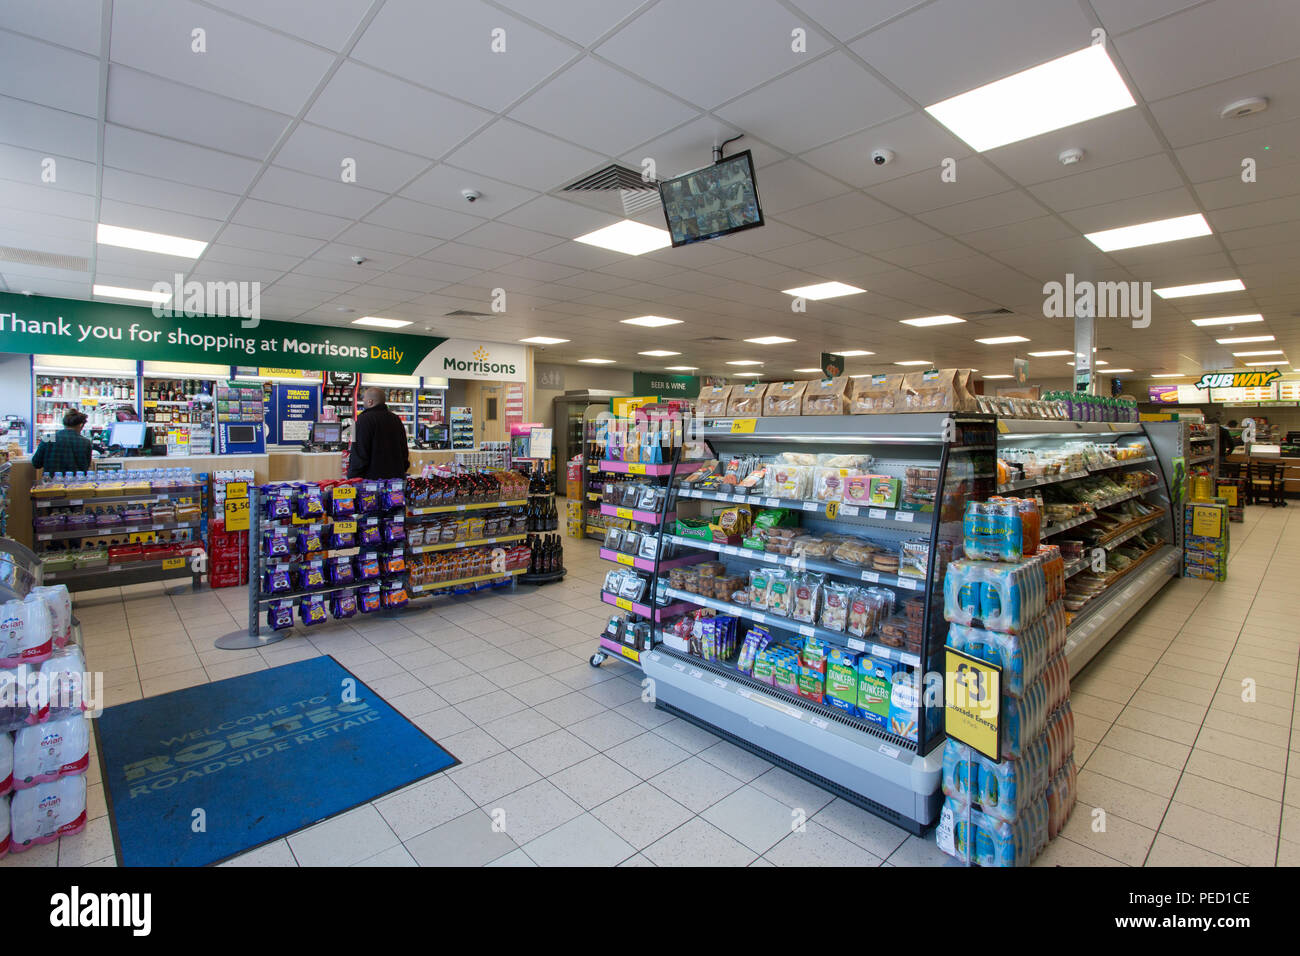 Morrisons Daily supermarket, Dudley Port, West Midlands Stock Photo